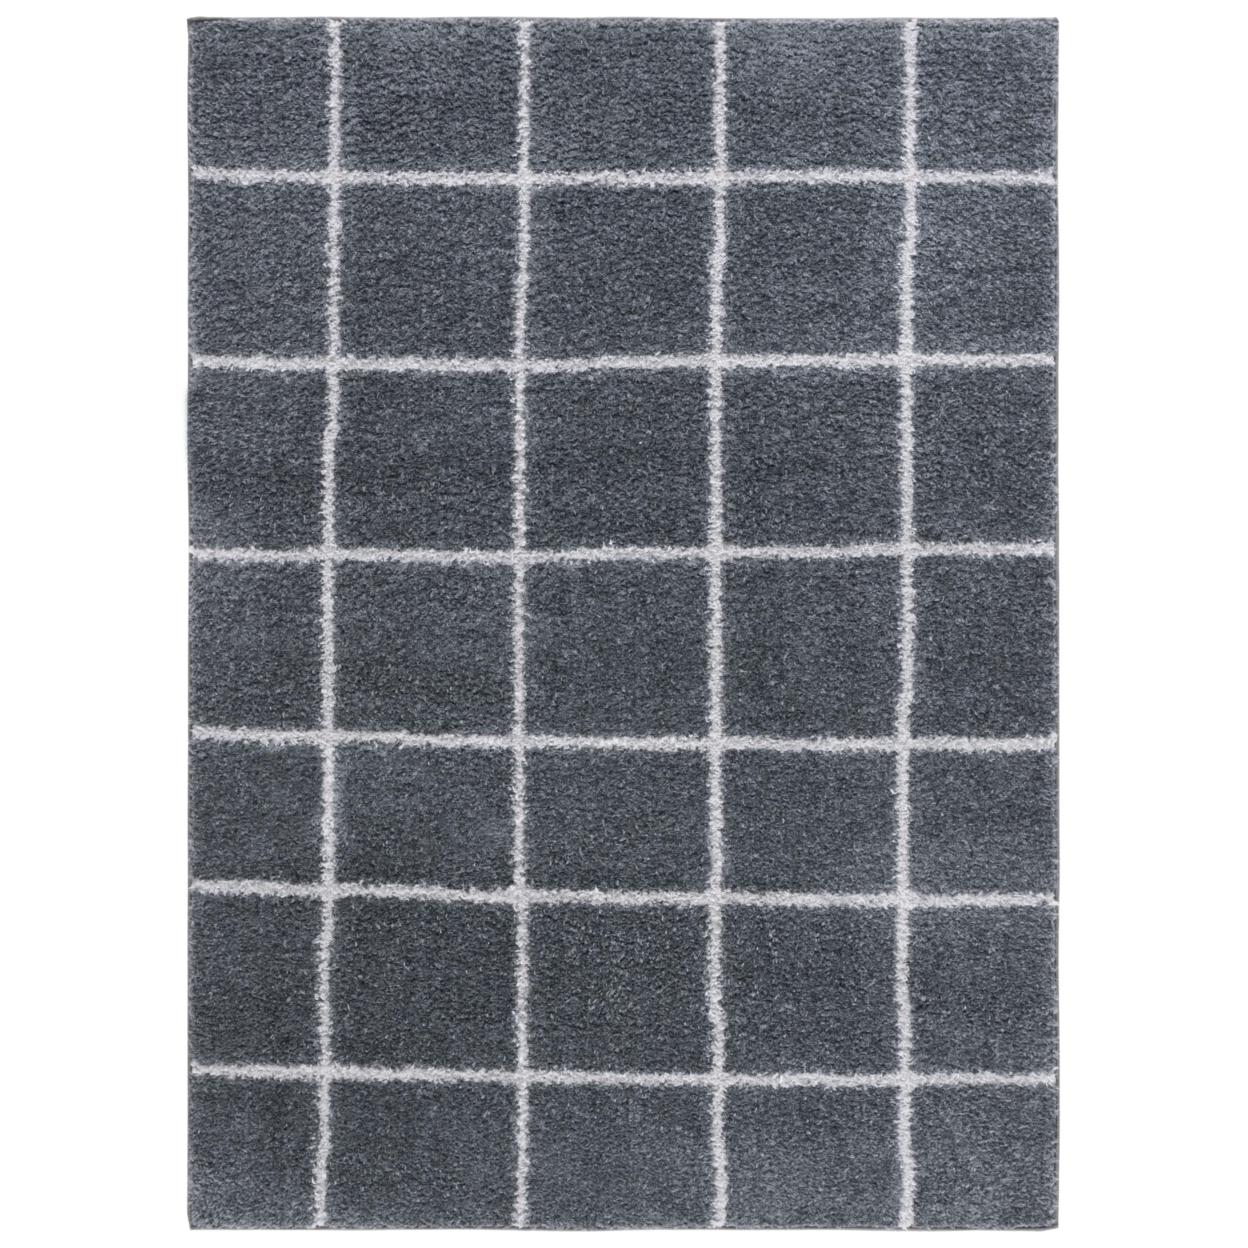 Safavieh NOR206F Norway Dark Grey / Light Grey - Black / Ivory, 8' X 10' Rectangle